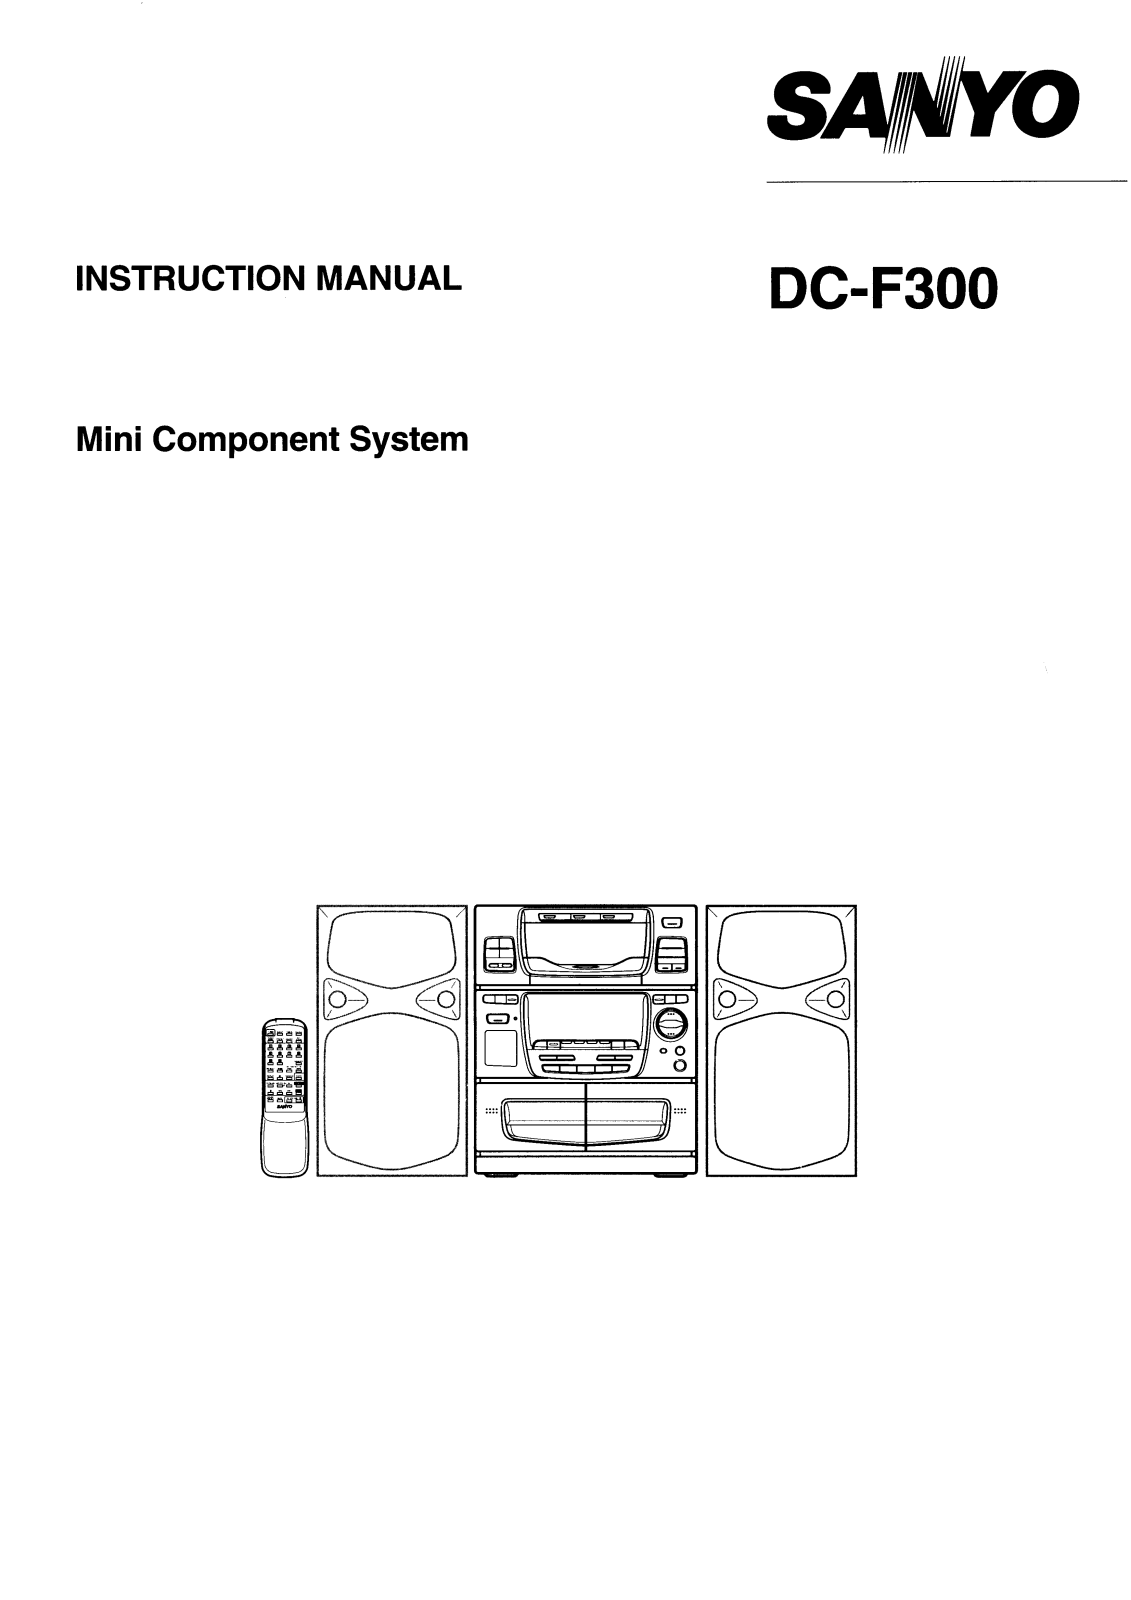 Sanyo DC-F300 Instruction Manual